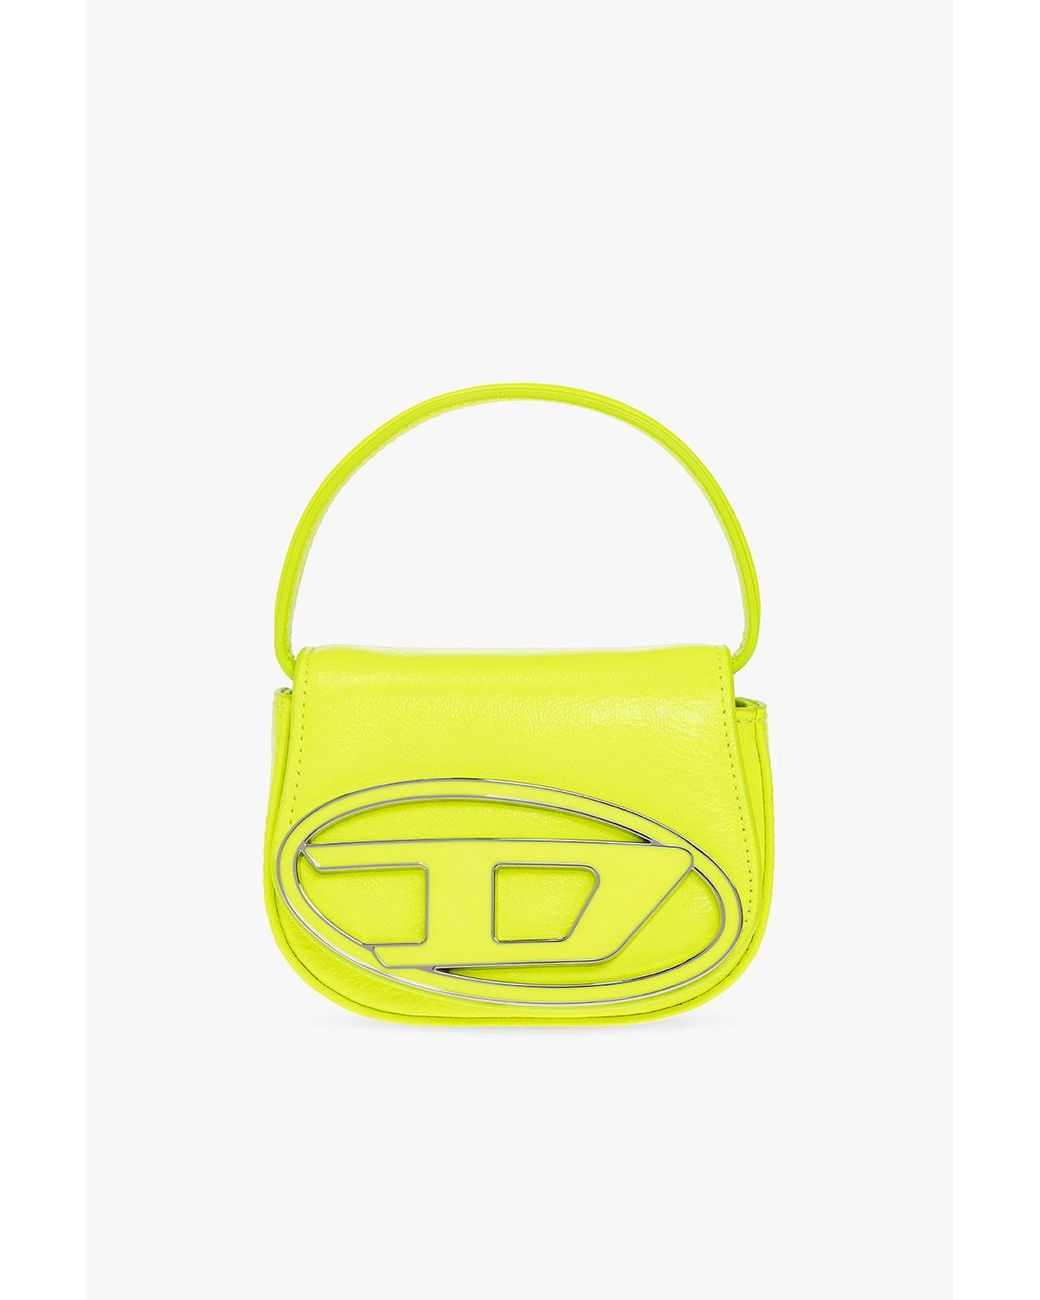 Fendi by Marc Jacobs Baguette Mini Neon Yellow Nappa Leather Bag